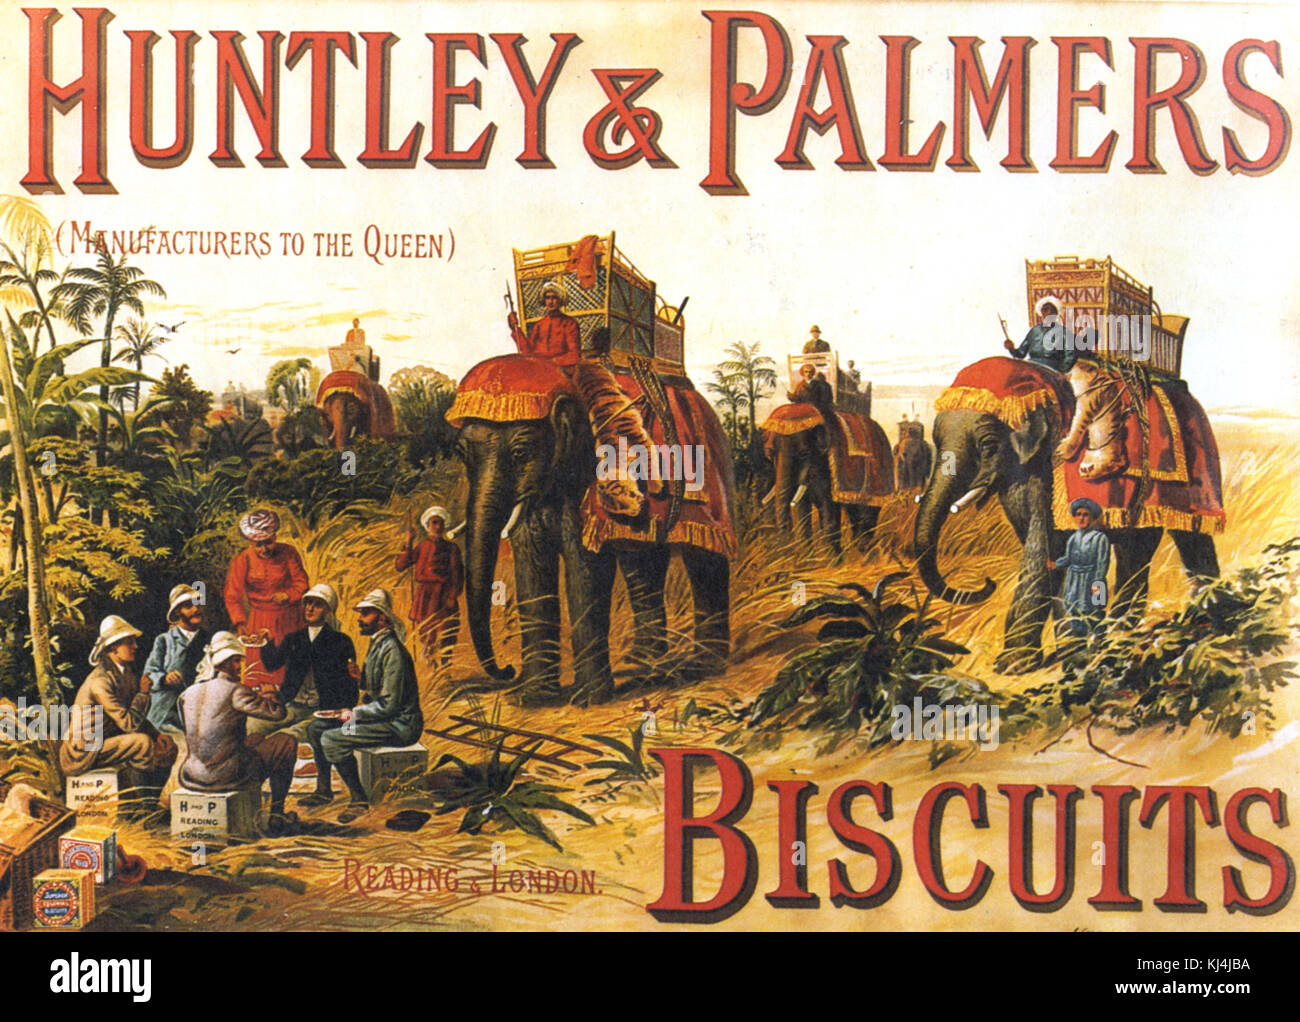 HUNTLEY & PALMERS BISCOTTI POSTER 1894 Foto Stock